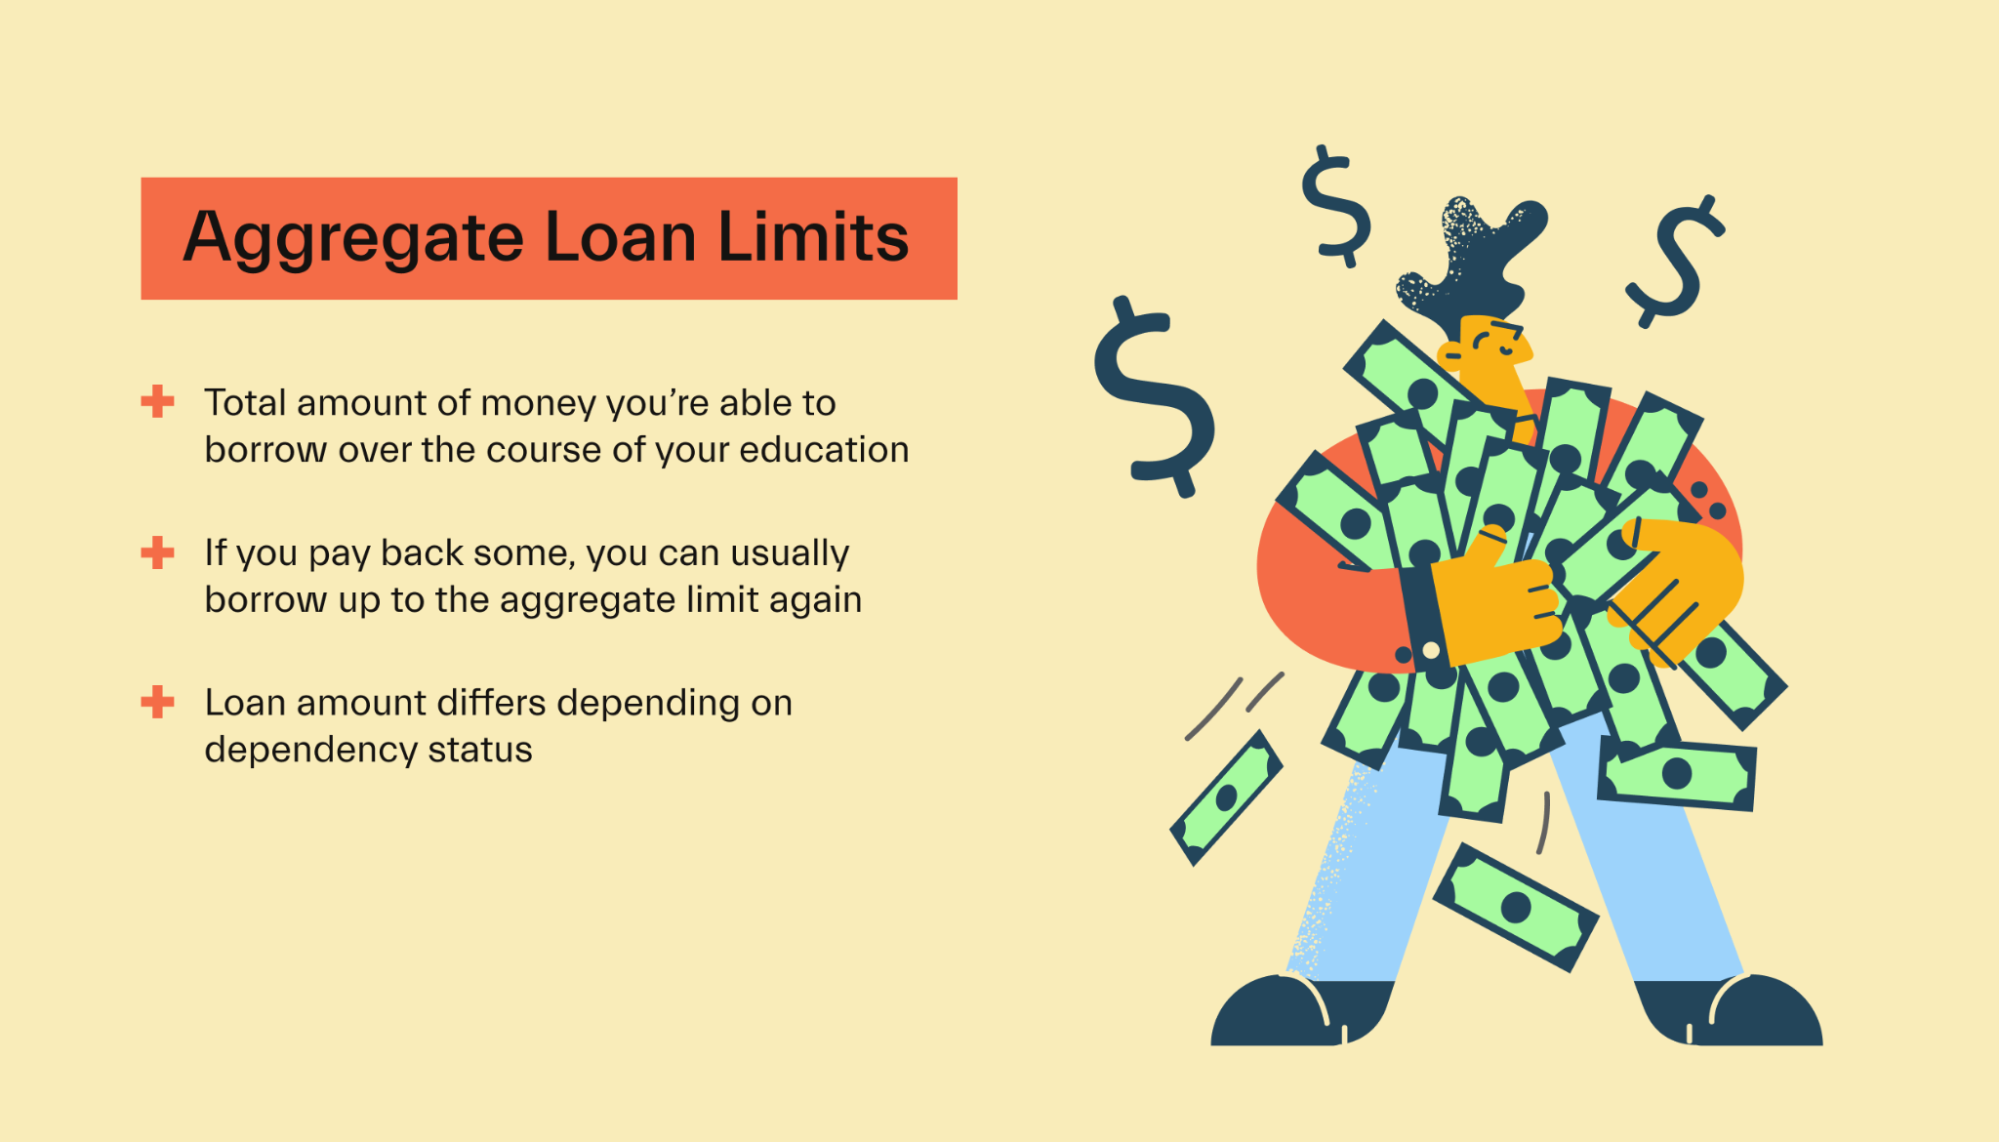 Aggregate loan limits explained